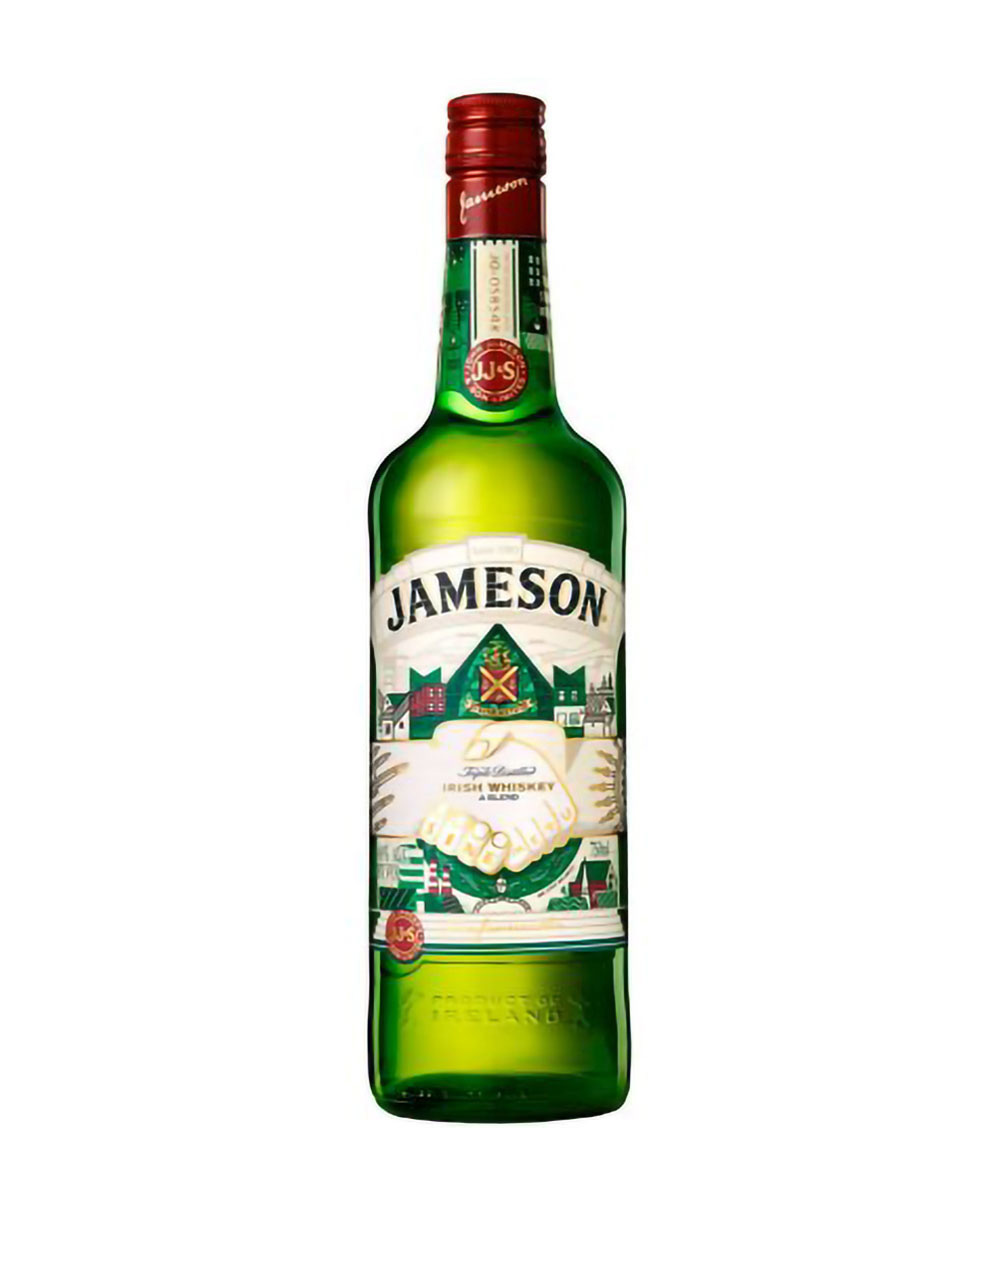 Jameson St. Patrick's Day Limited Edition Original Irish Whiskey